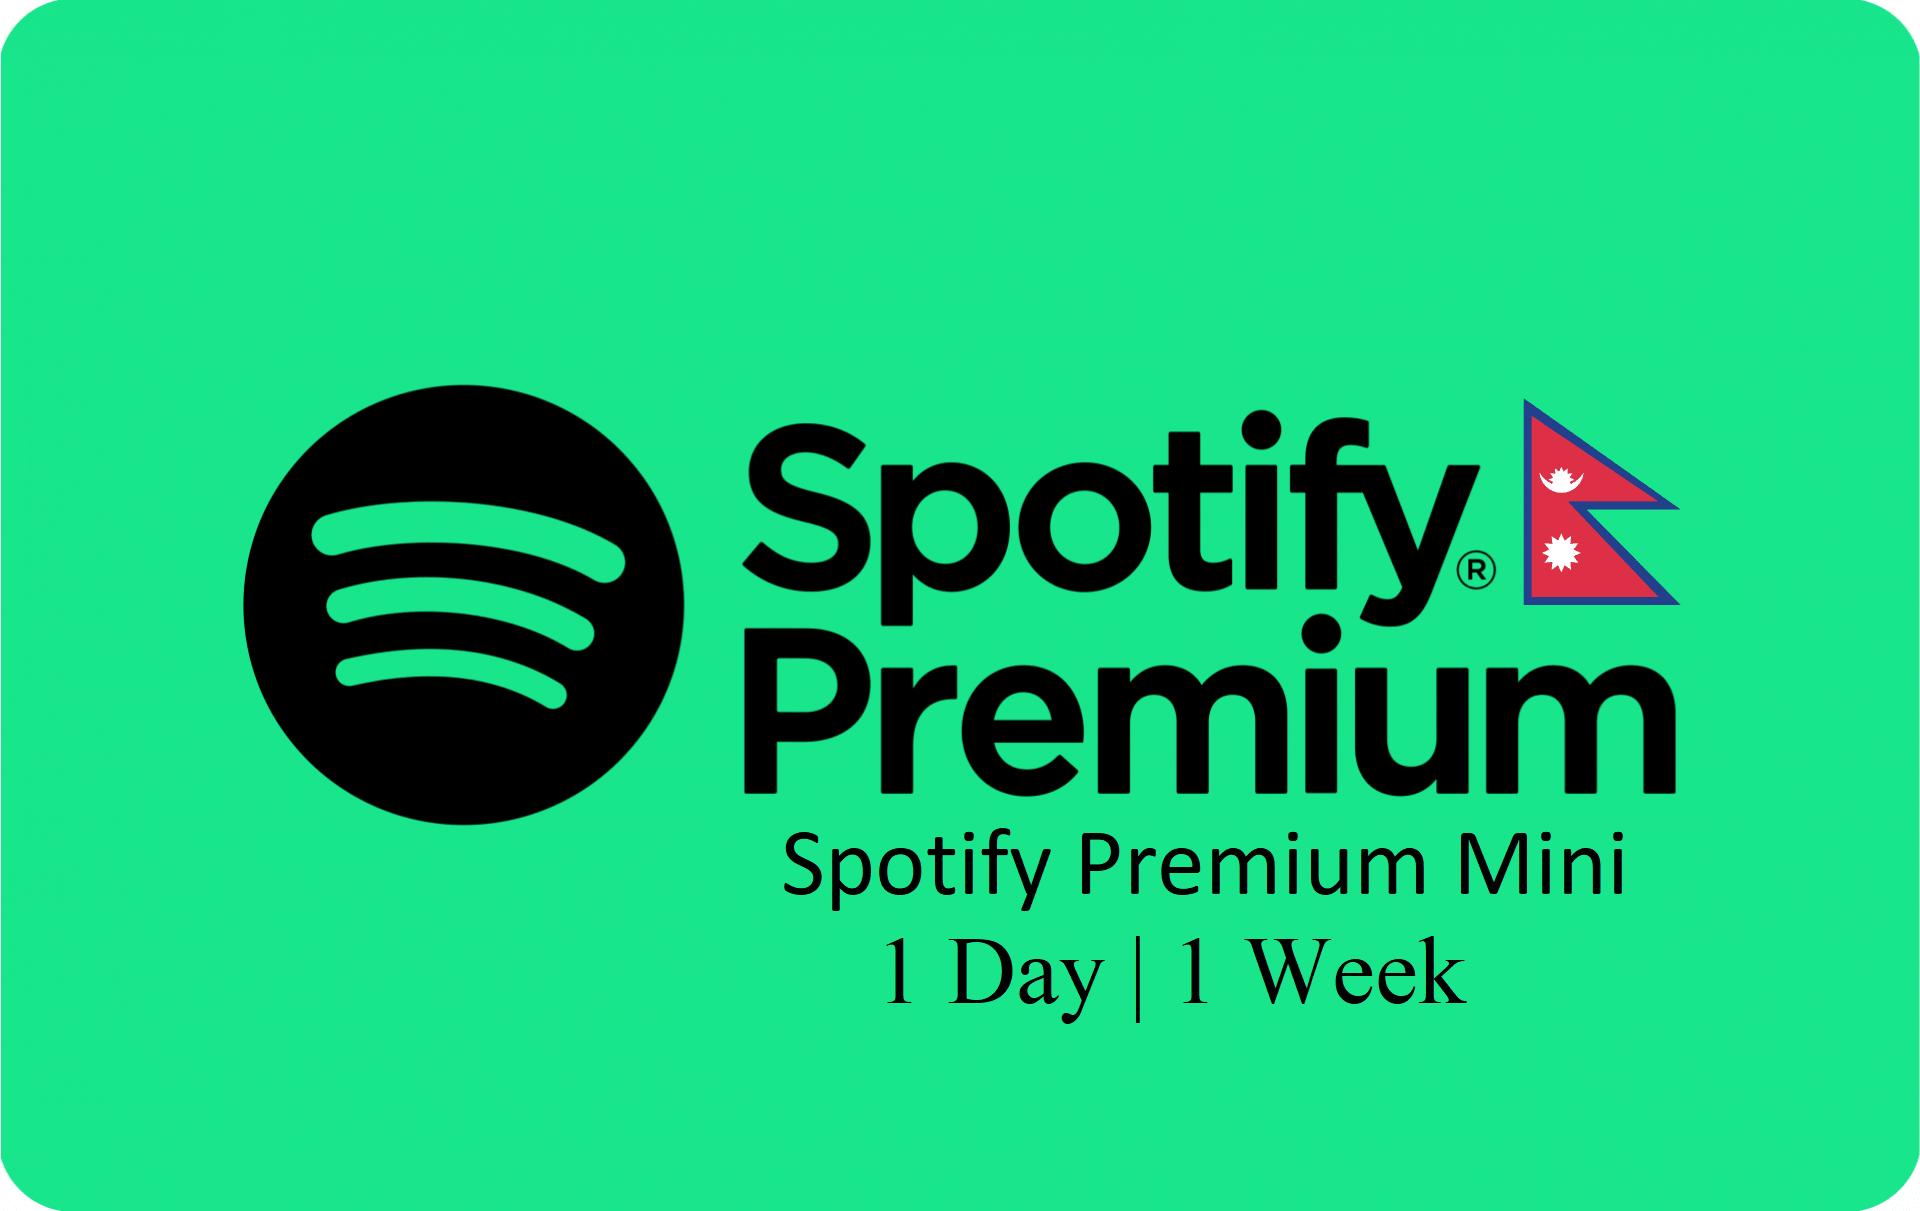 Spotify Premium Mini